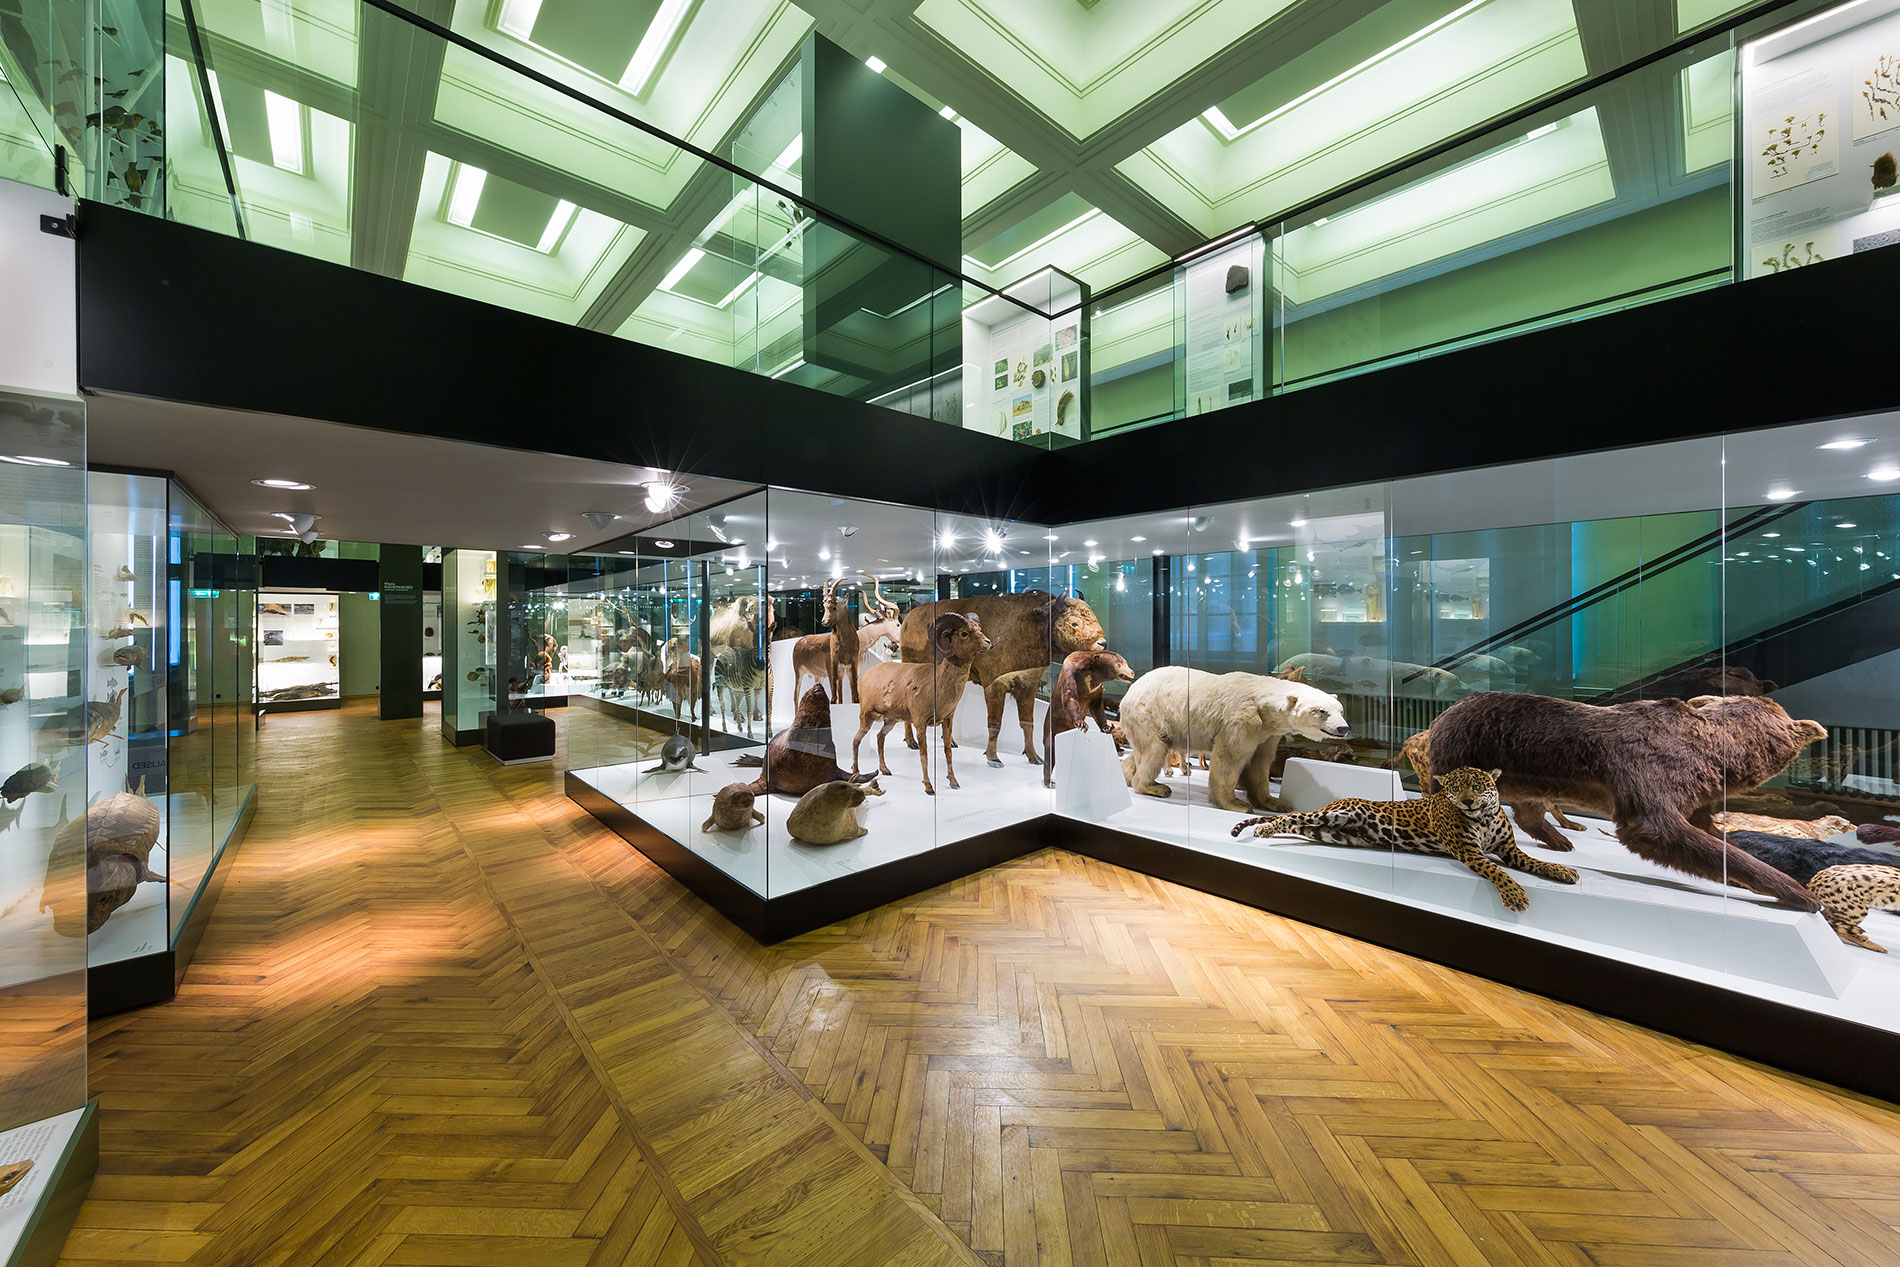 University of Tartu Natural History Museum